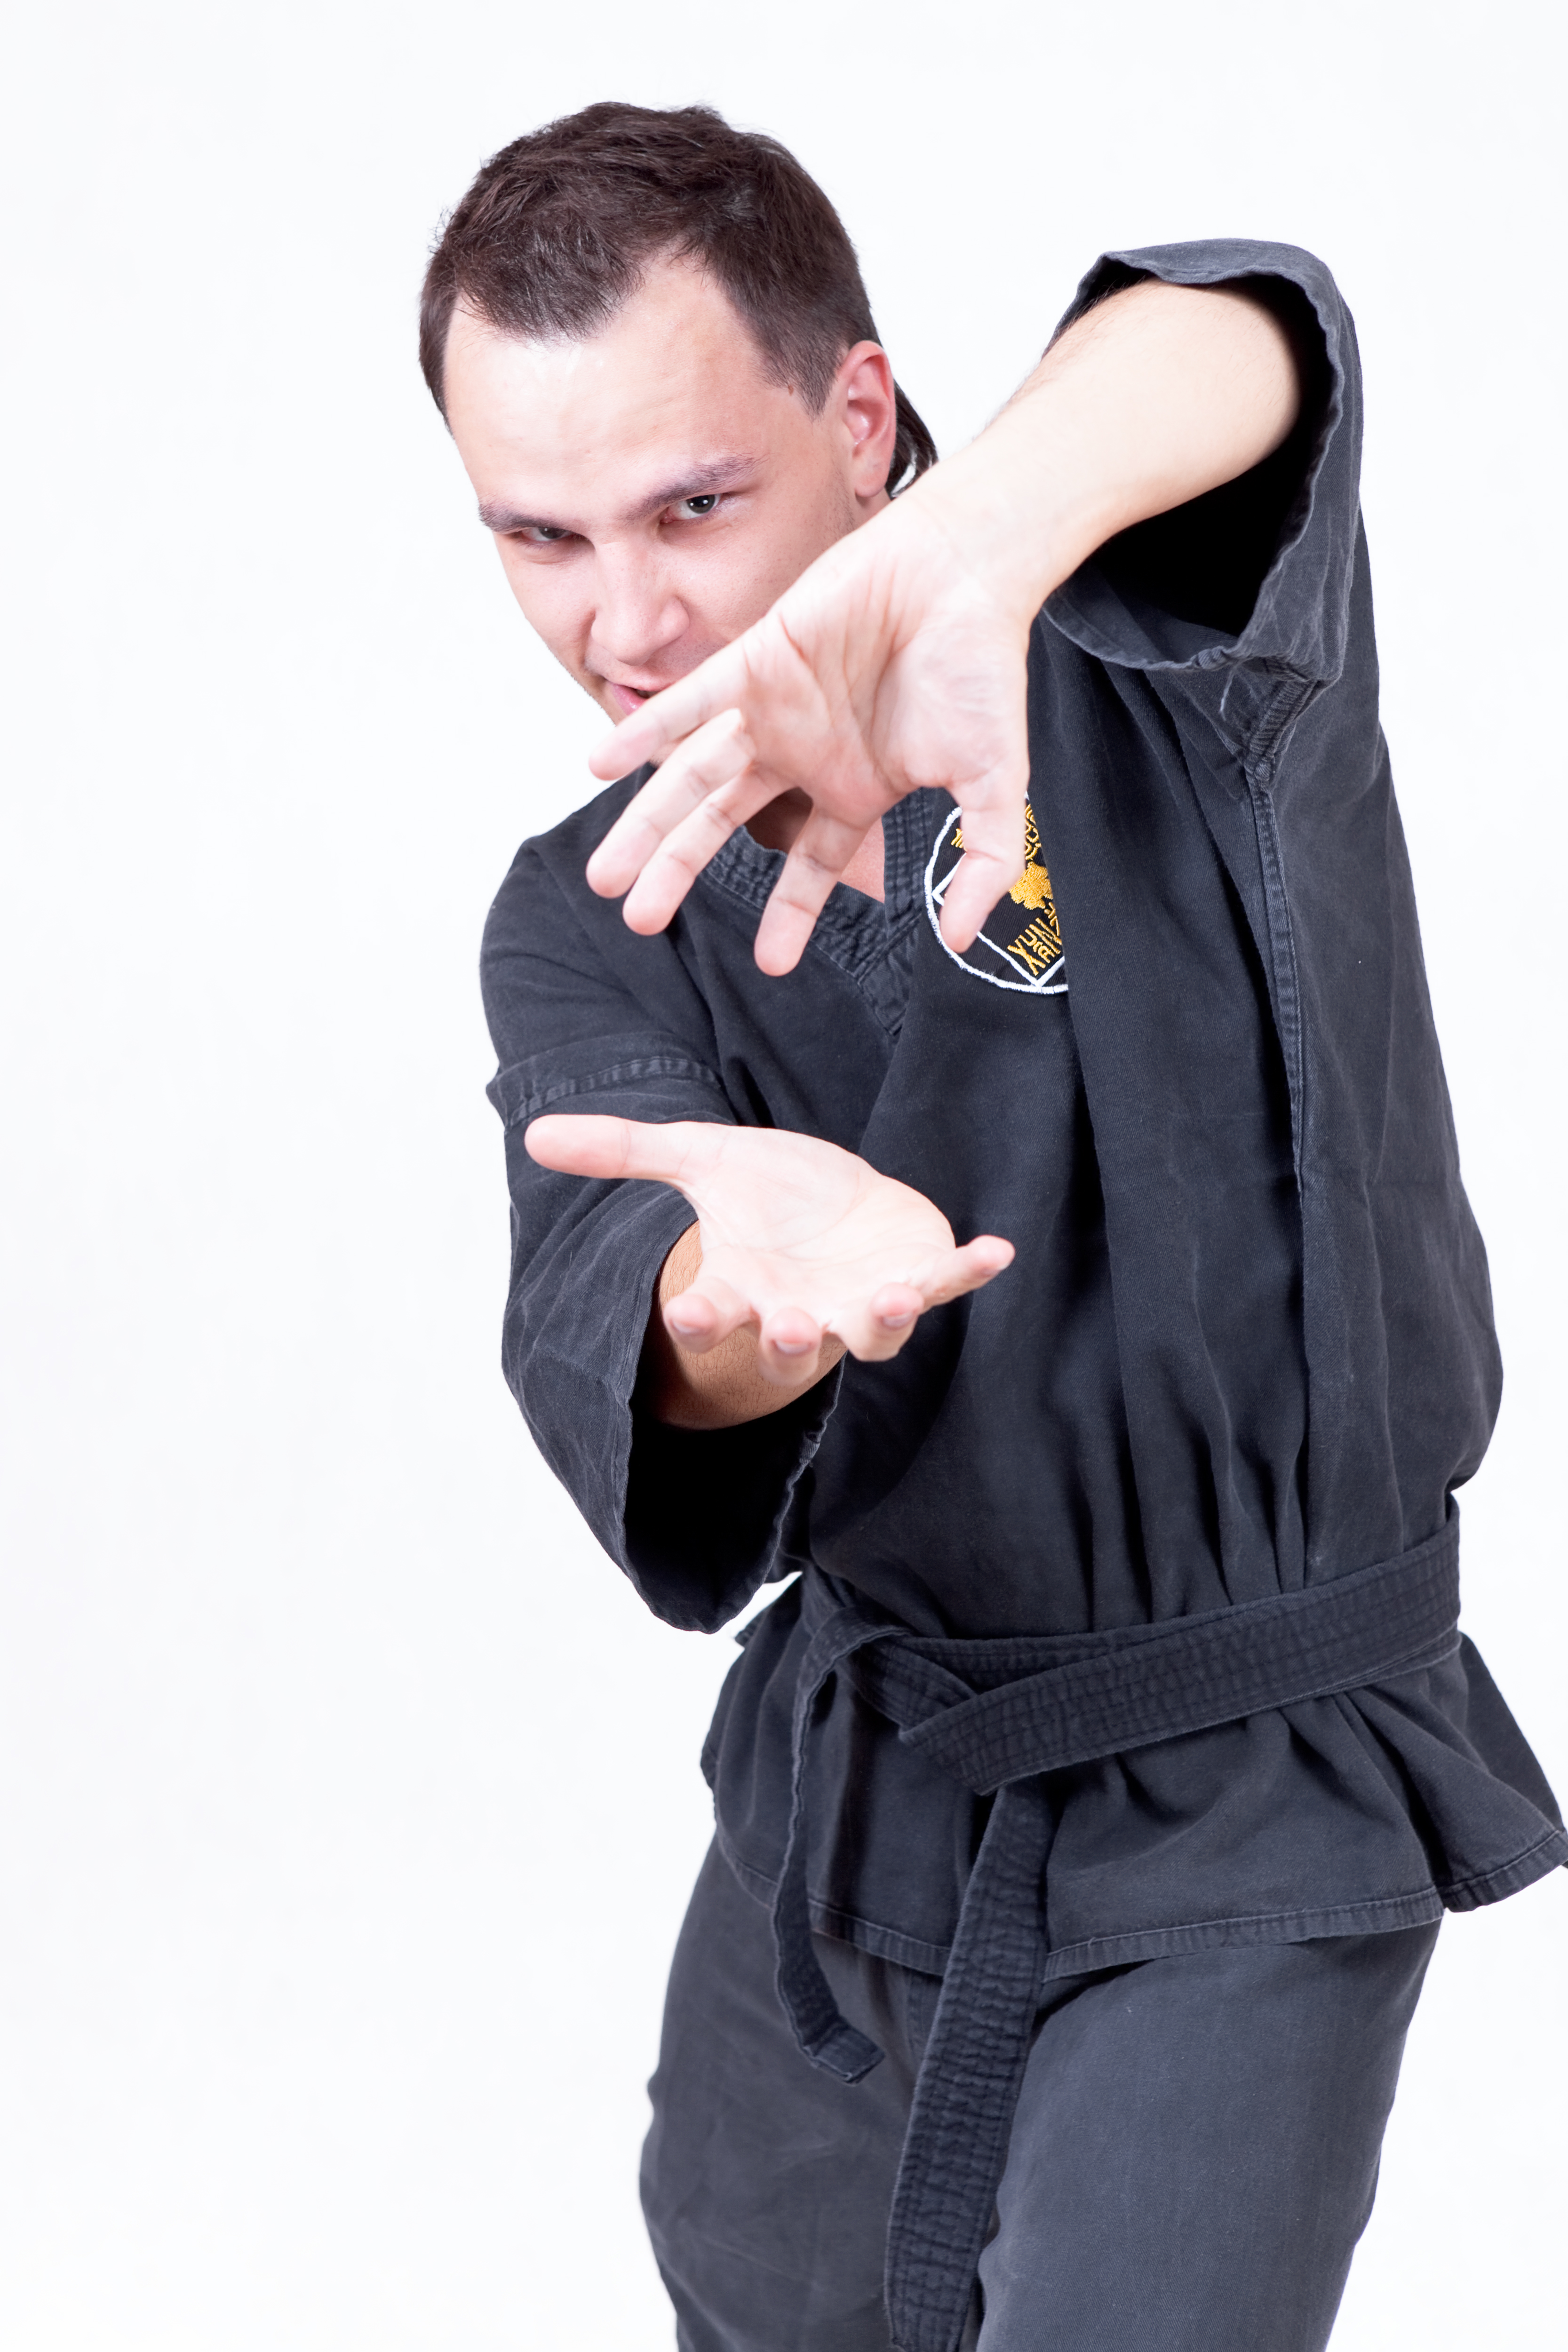 Sportsman, Con2011, Fighter, Kungfu, Male, HQ Photo